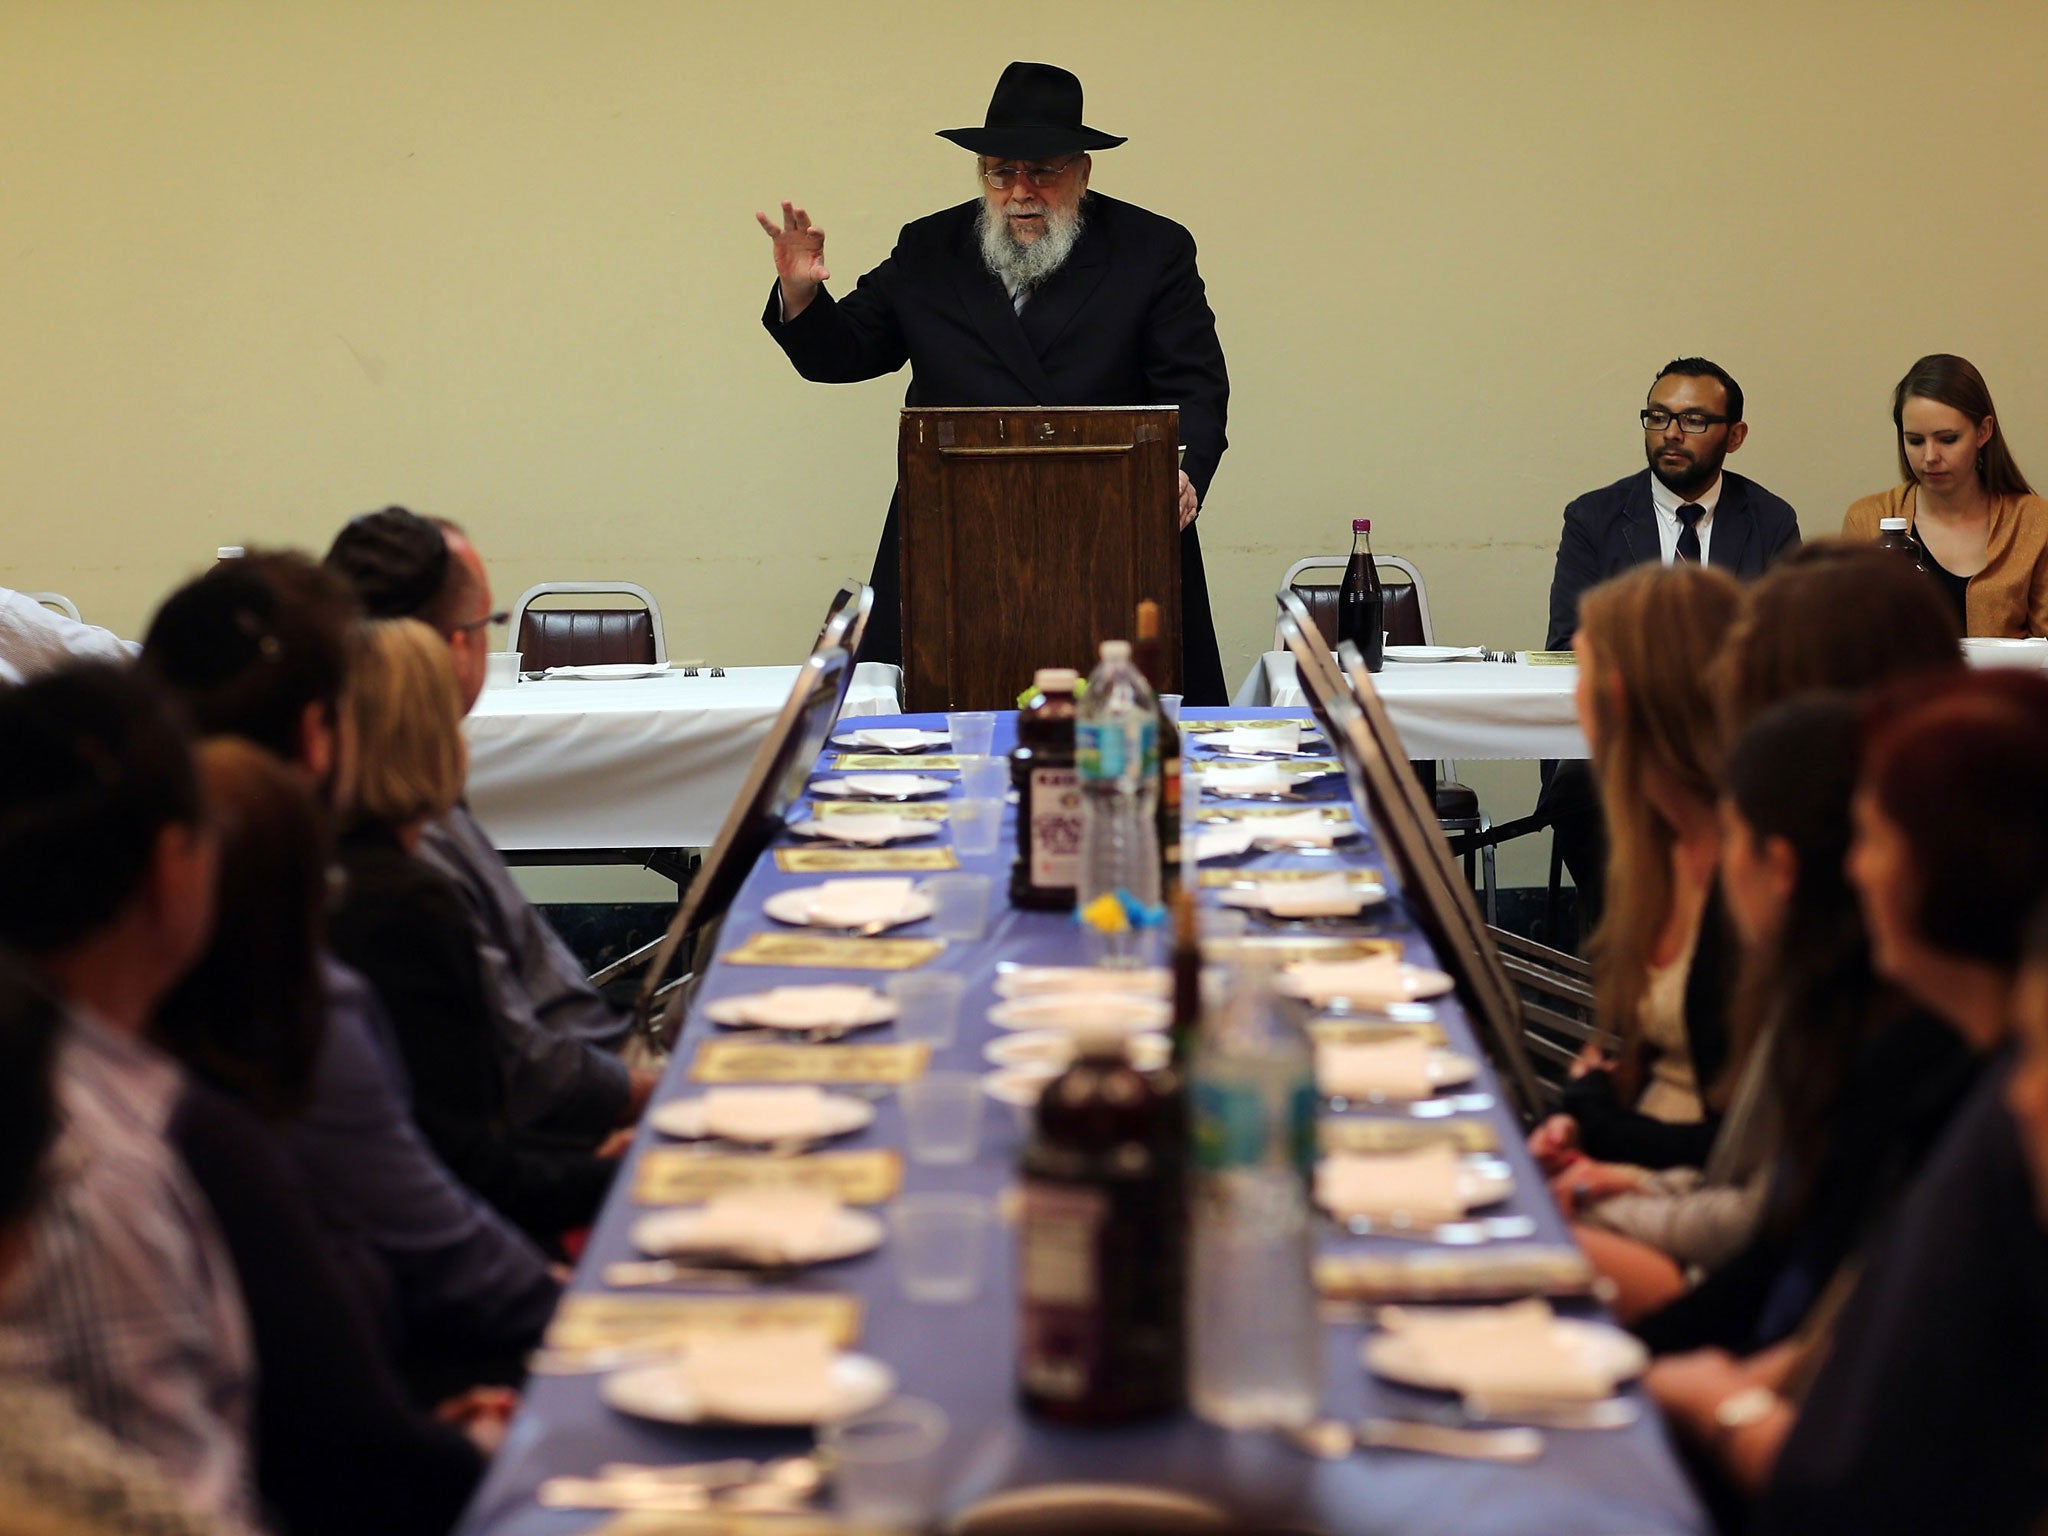 A rabbi leads a community Passover Seder in Miami Beach, Florida